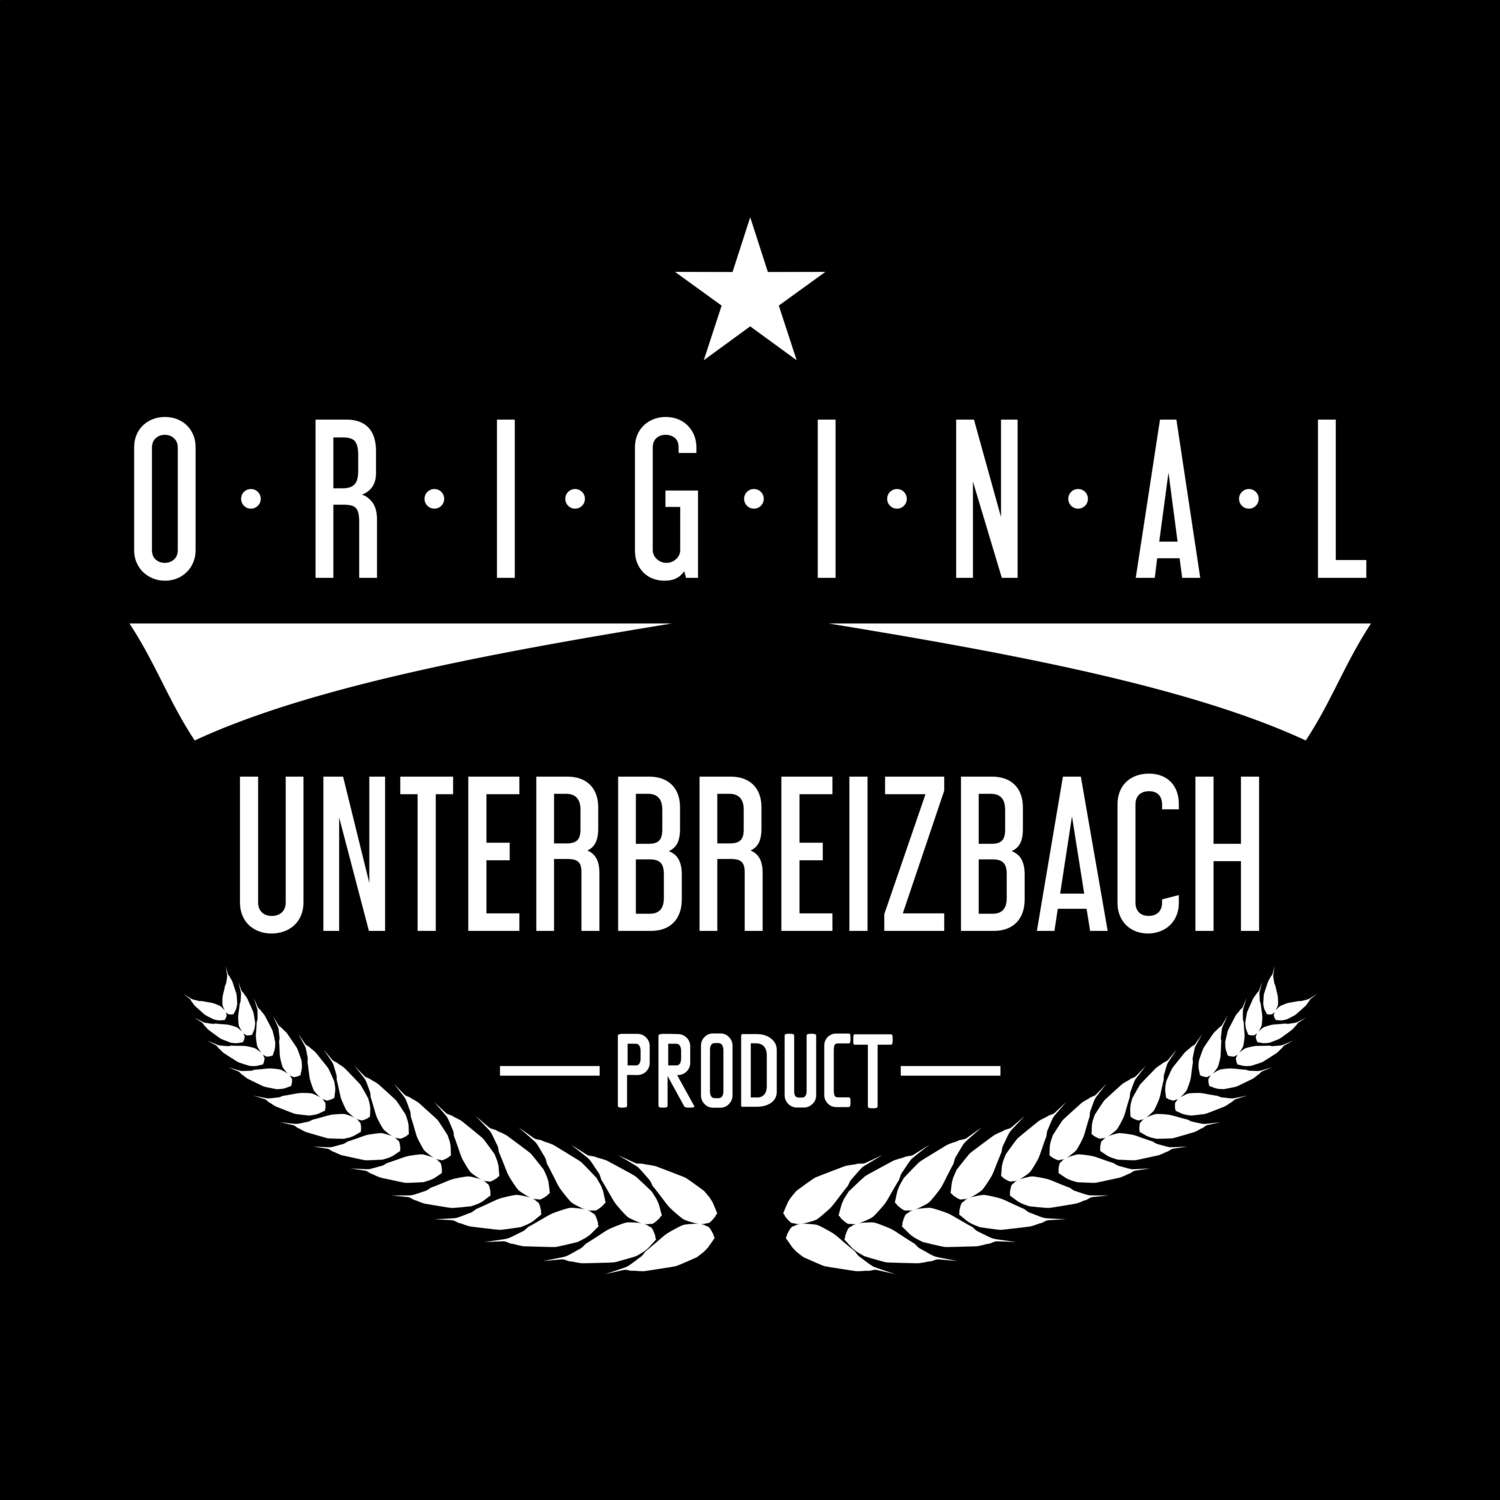 Unterbreizbach T-Shirt »Original Product«